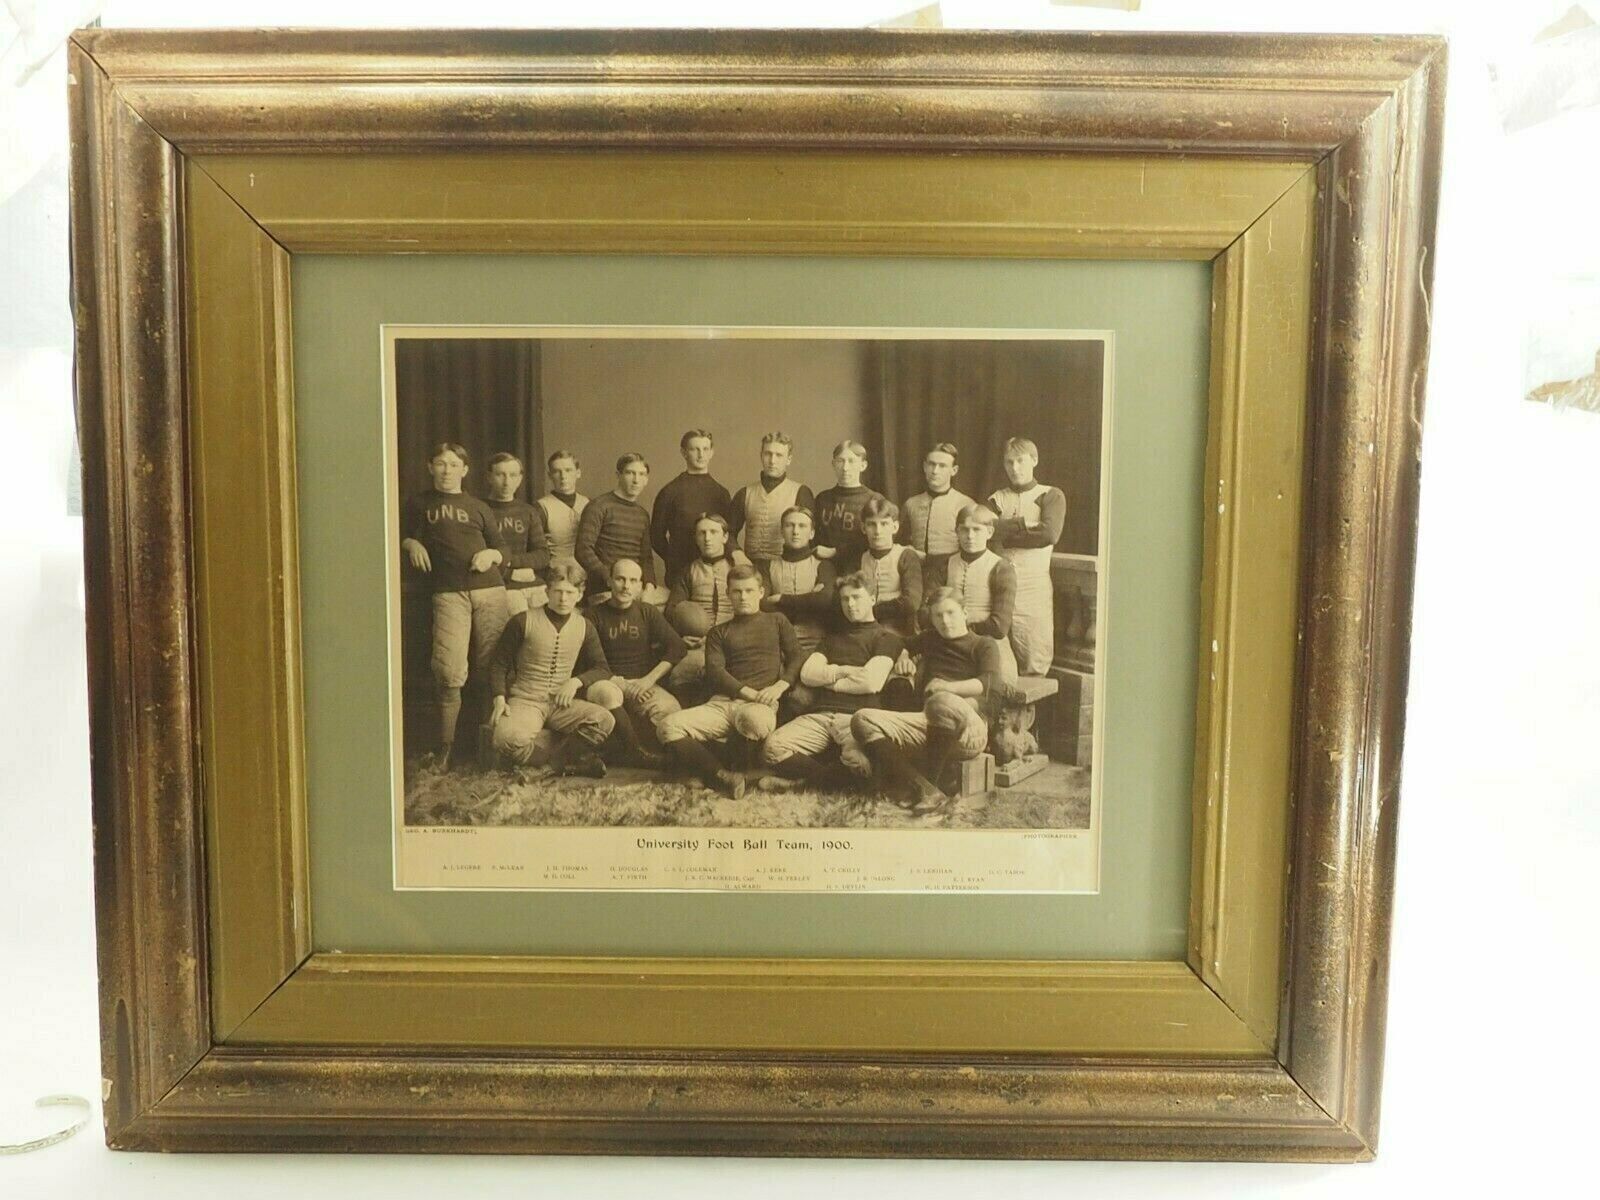 University of New Brunswick Football Team 1900 Geo. A. Burkhardt Photographer